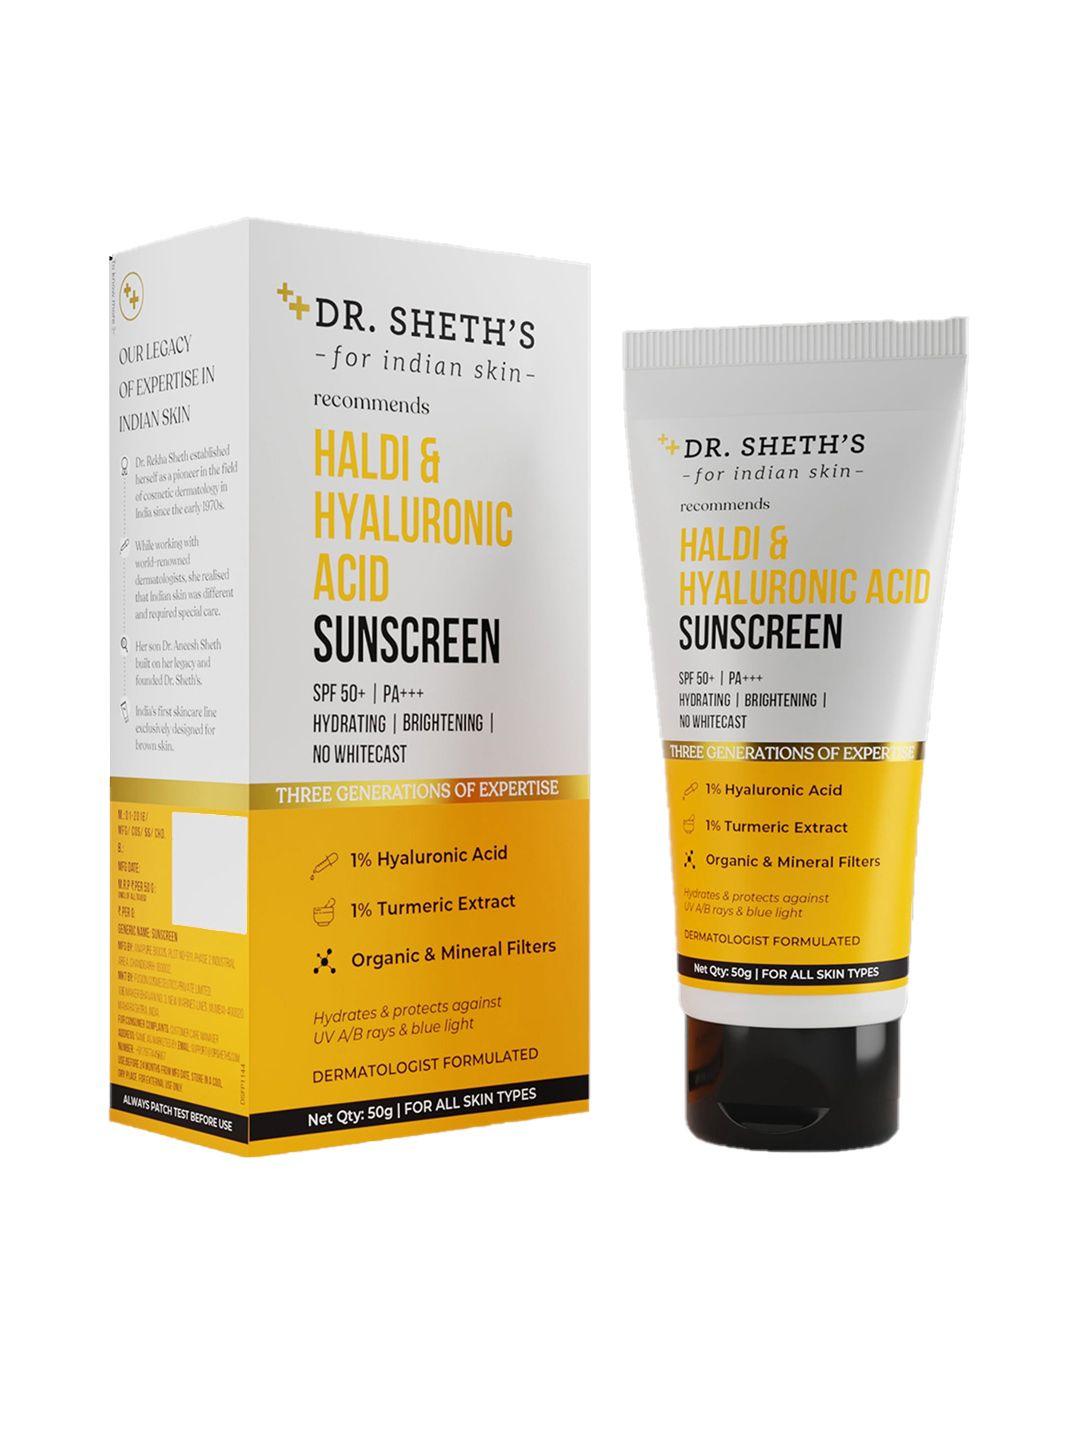 DR. SHETHS Haldi & Hyaluronic Acid SPF50 Hydrating Sunscreen - 50g